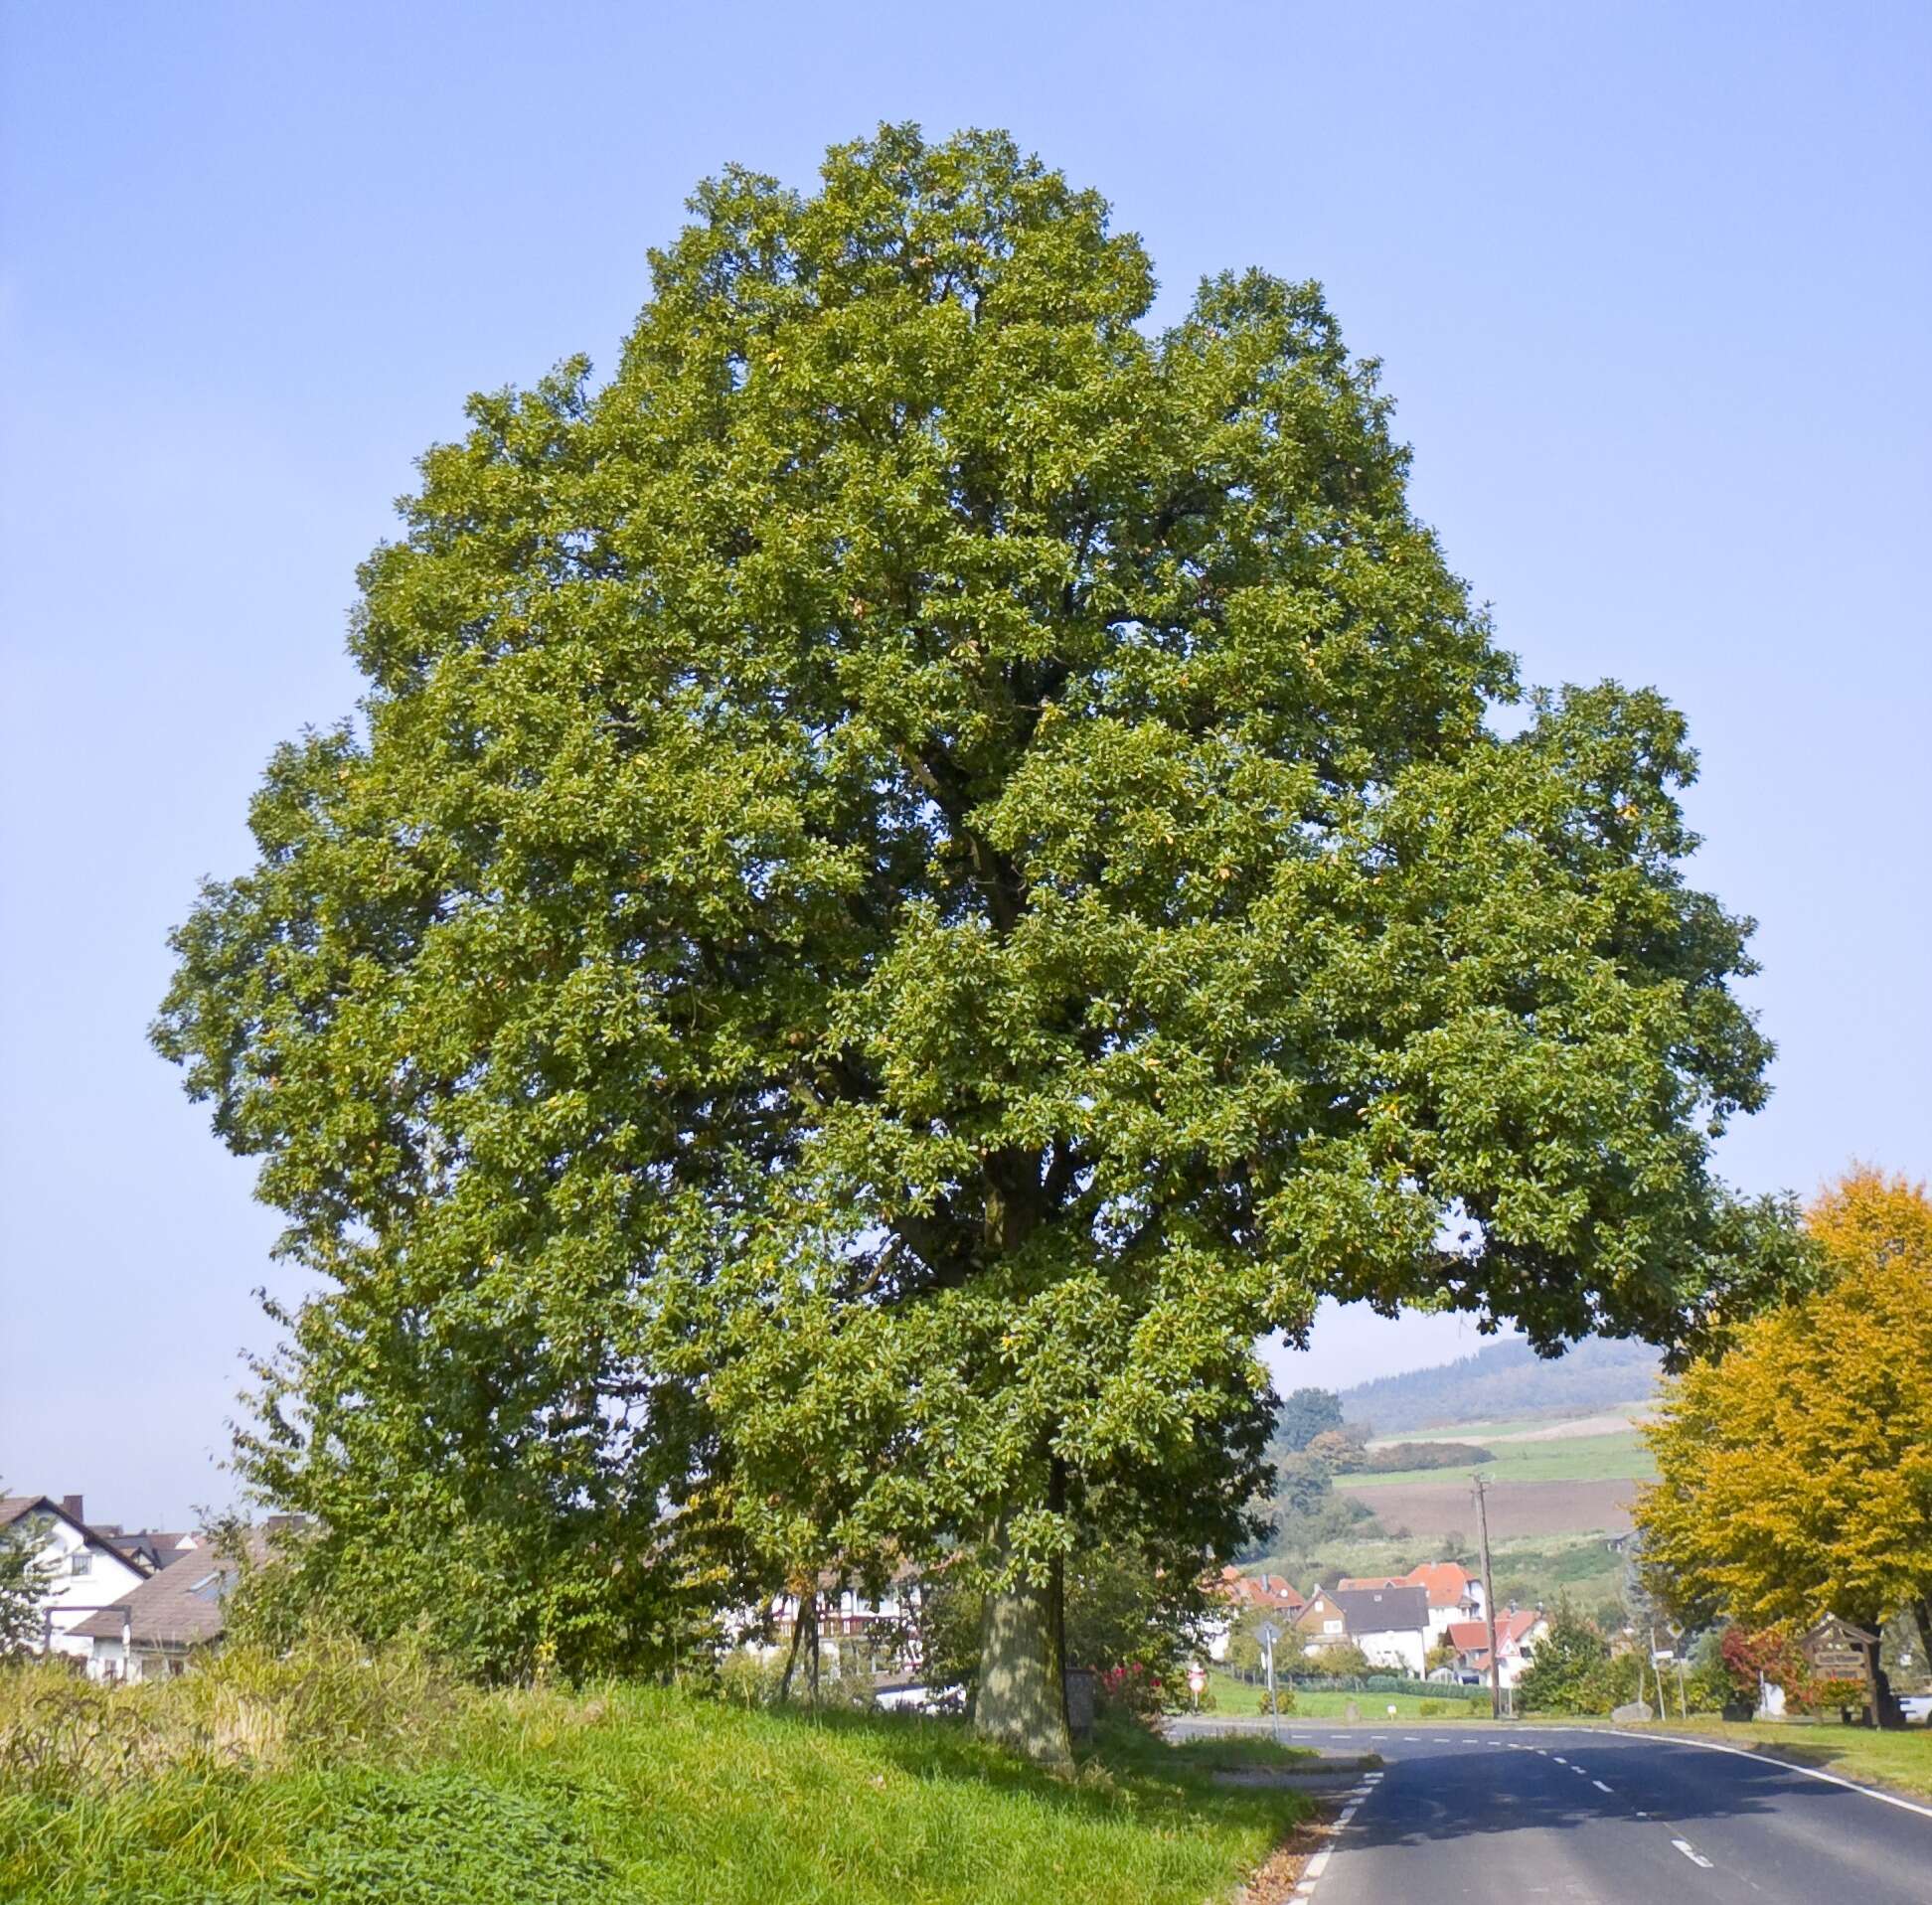 Image of sessile oak, durmast oak